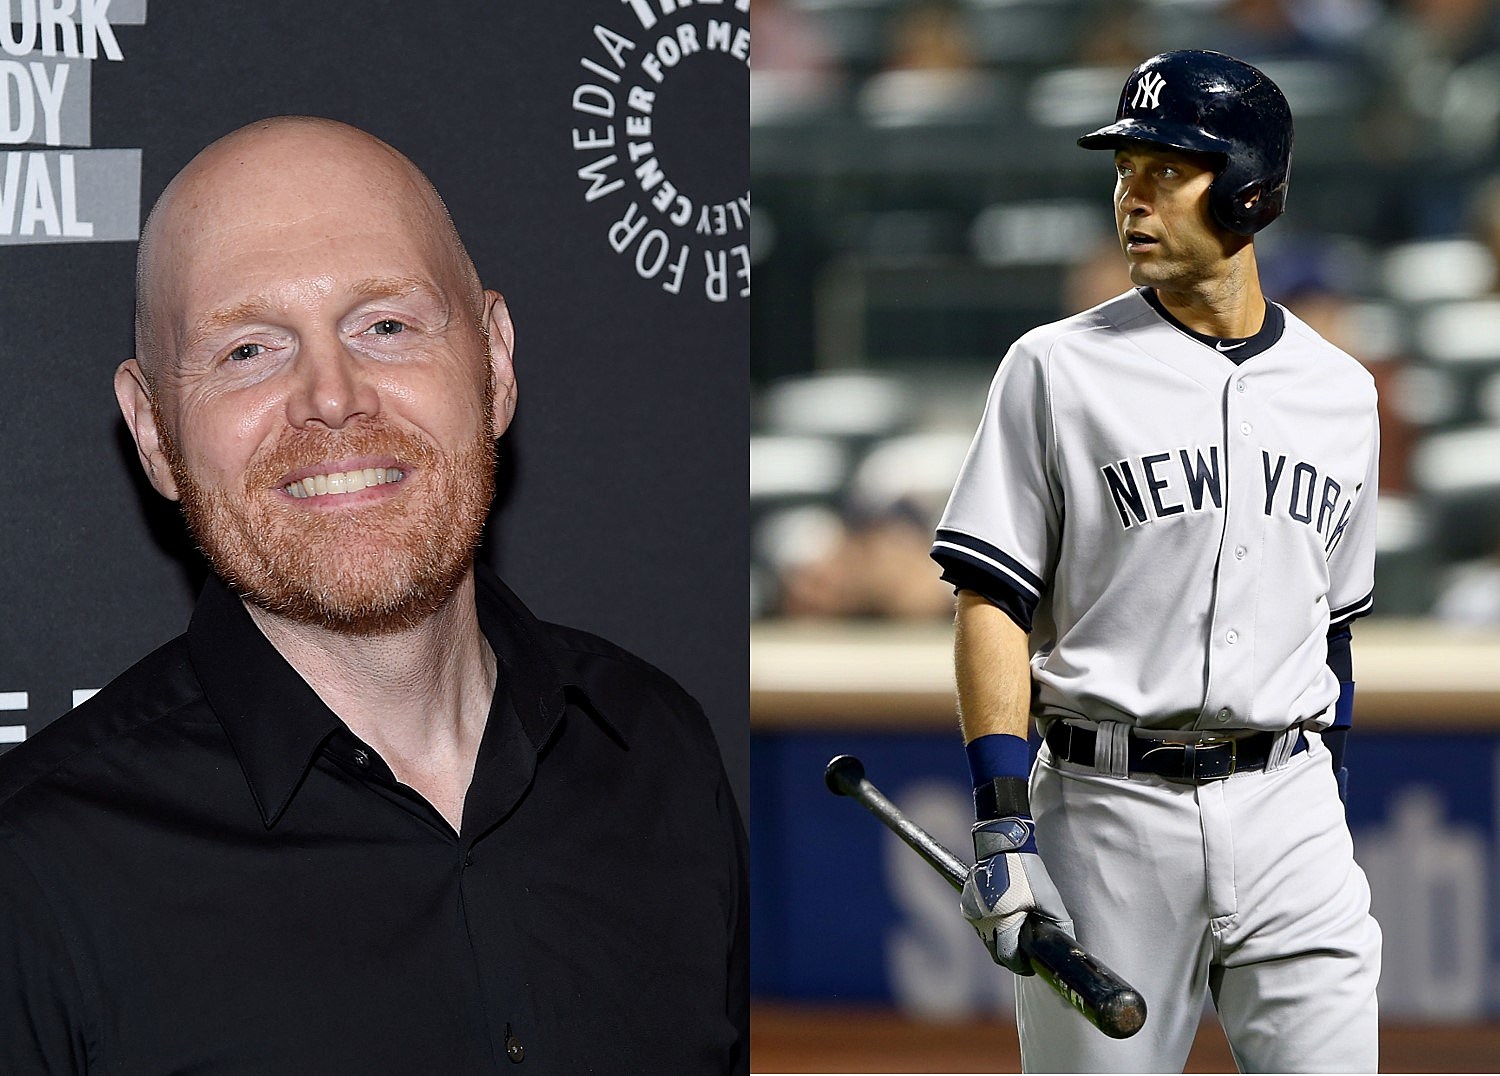 Boston Comedian Slams New York Yankees' Legend for Batting Antics